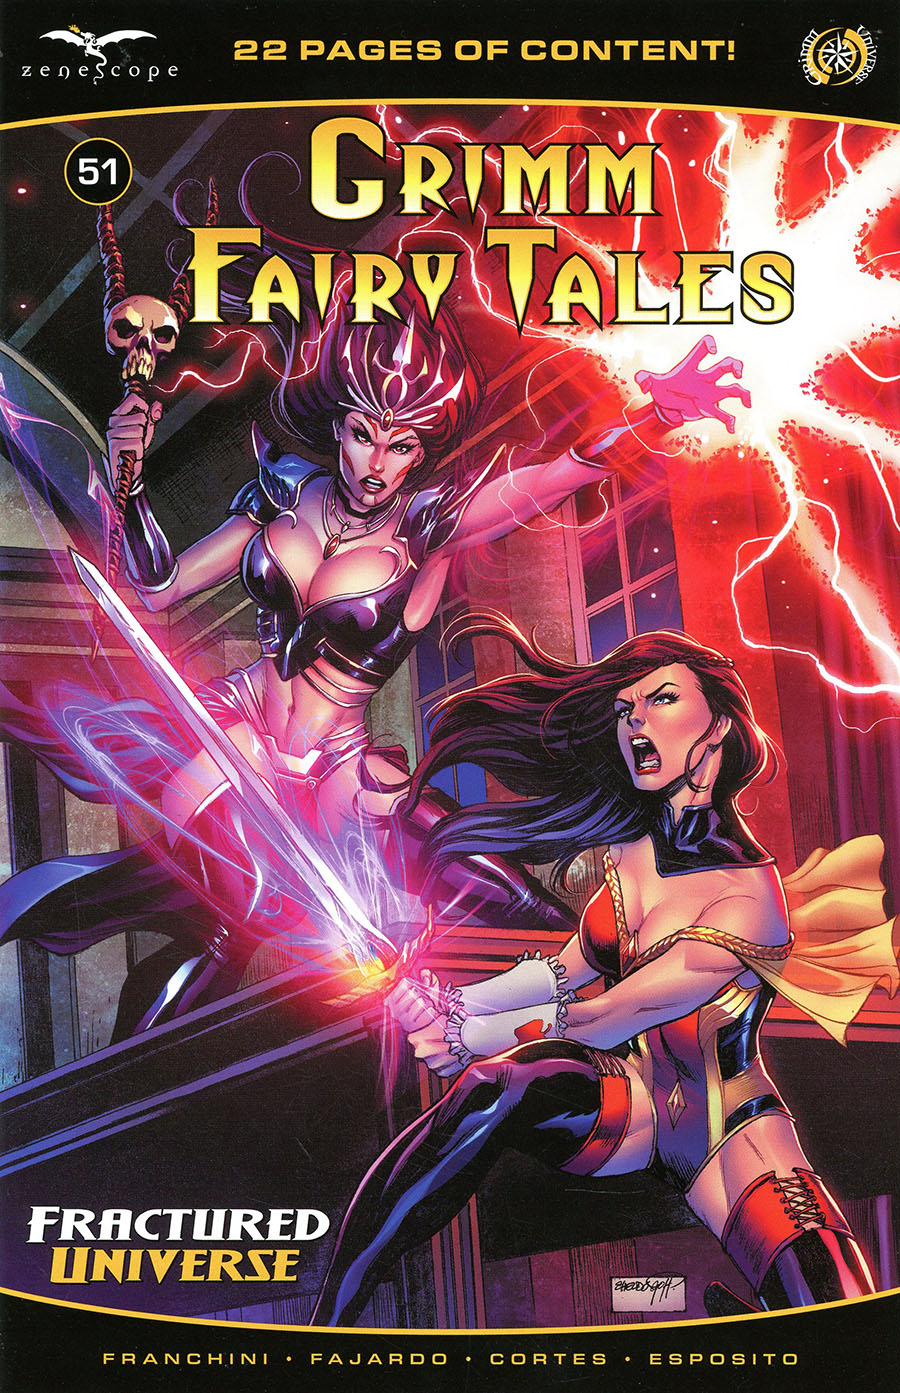 Grimm Fairy Tales Vol 2 #51 Cover B Sheldon Goh